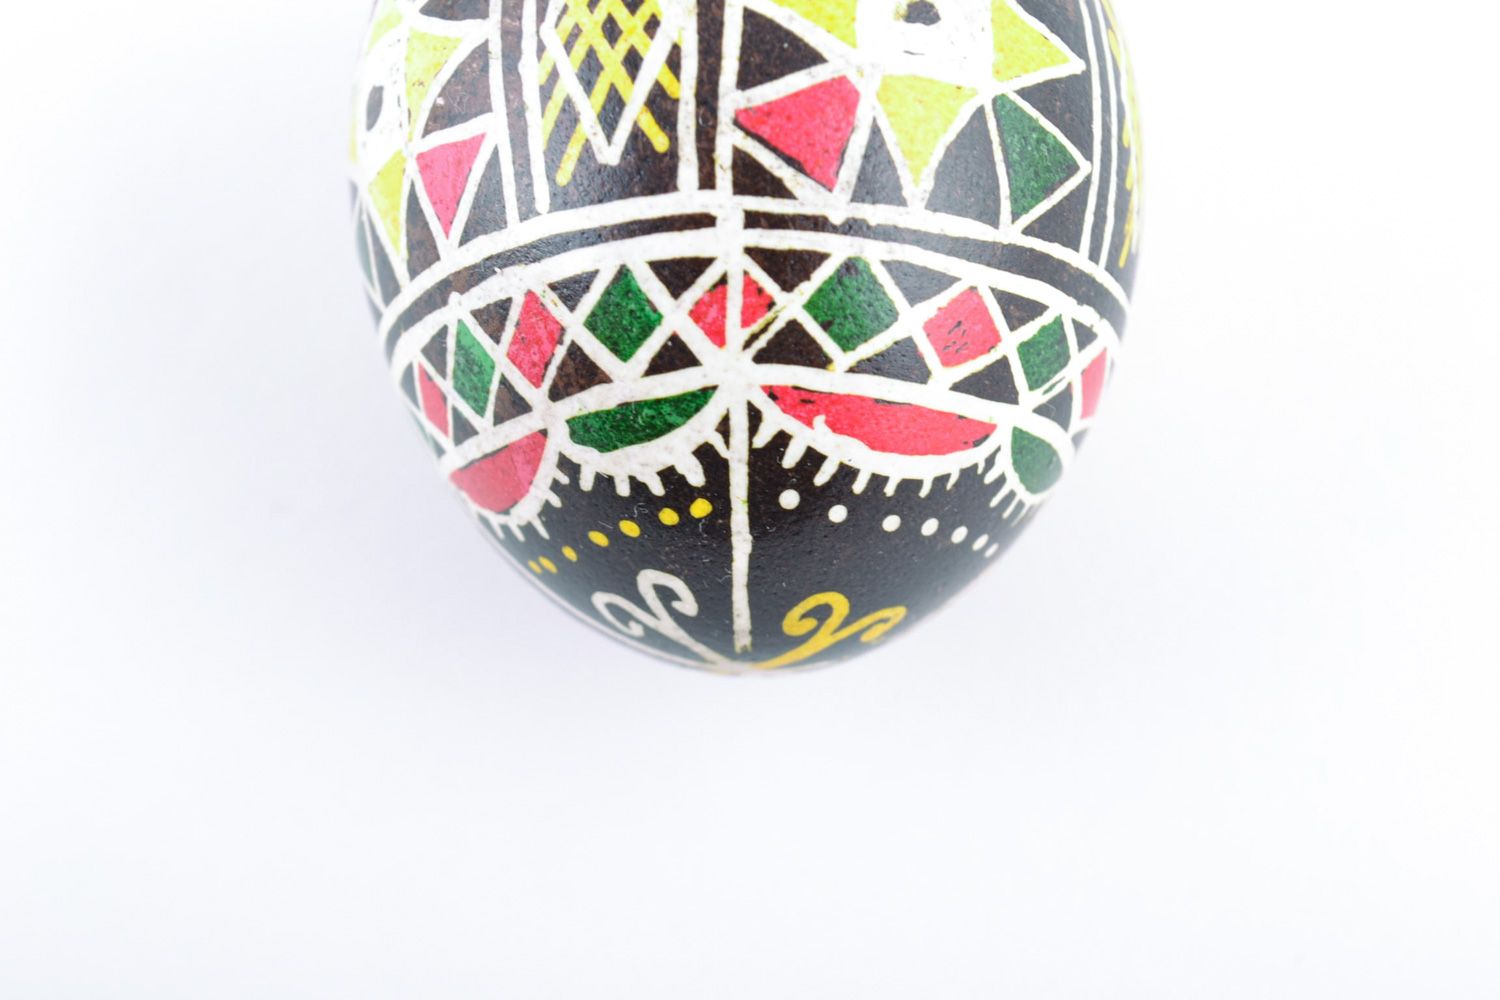 Oeuf de Pâques décoration faite main cadeau original symbolique pour Pâques photo 3